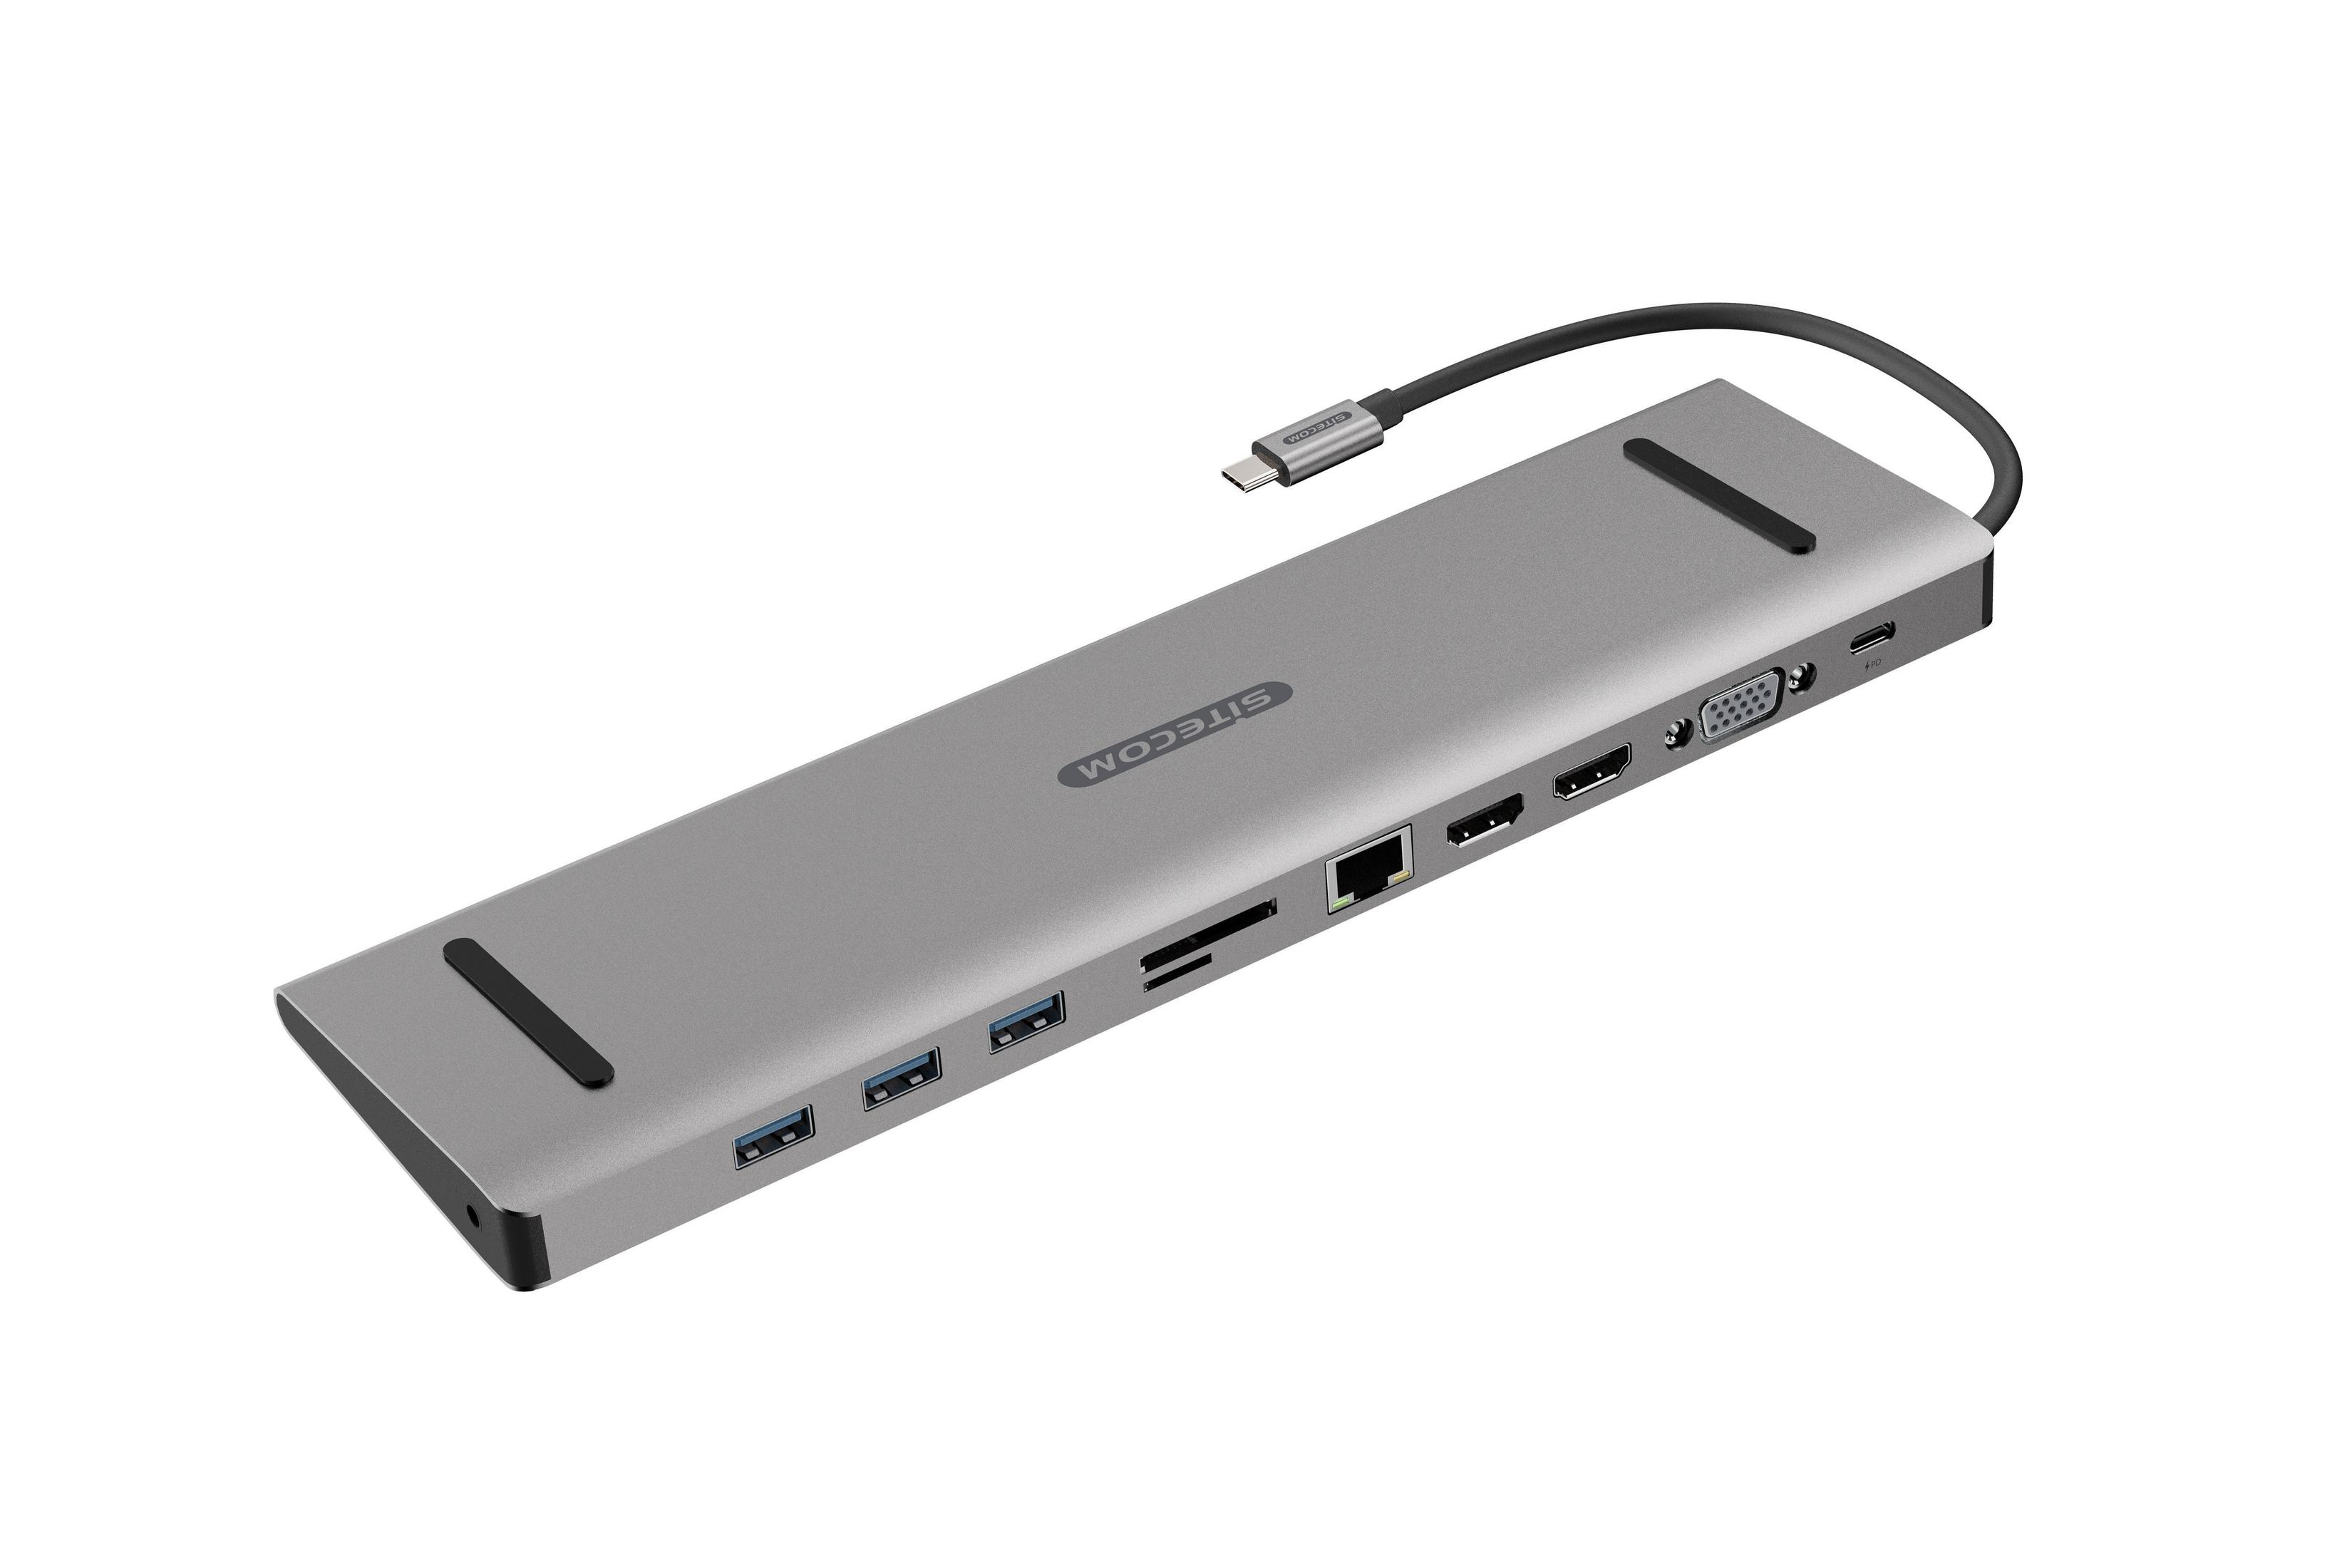 3.1 MULTIPRODOCK100WPD USB CN-389 Multiport, Silber SITECOM USB-C